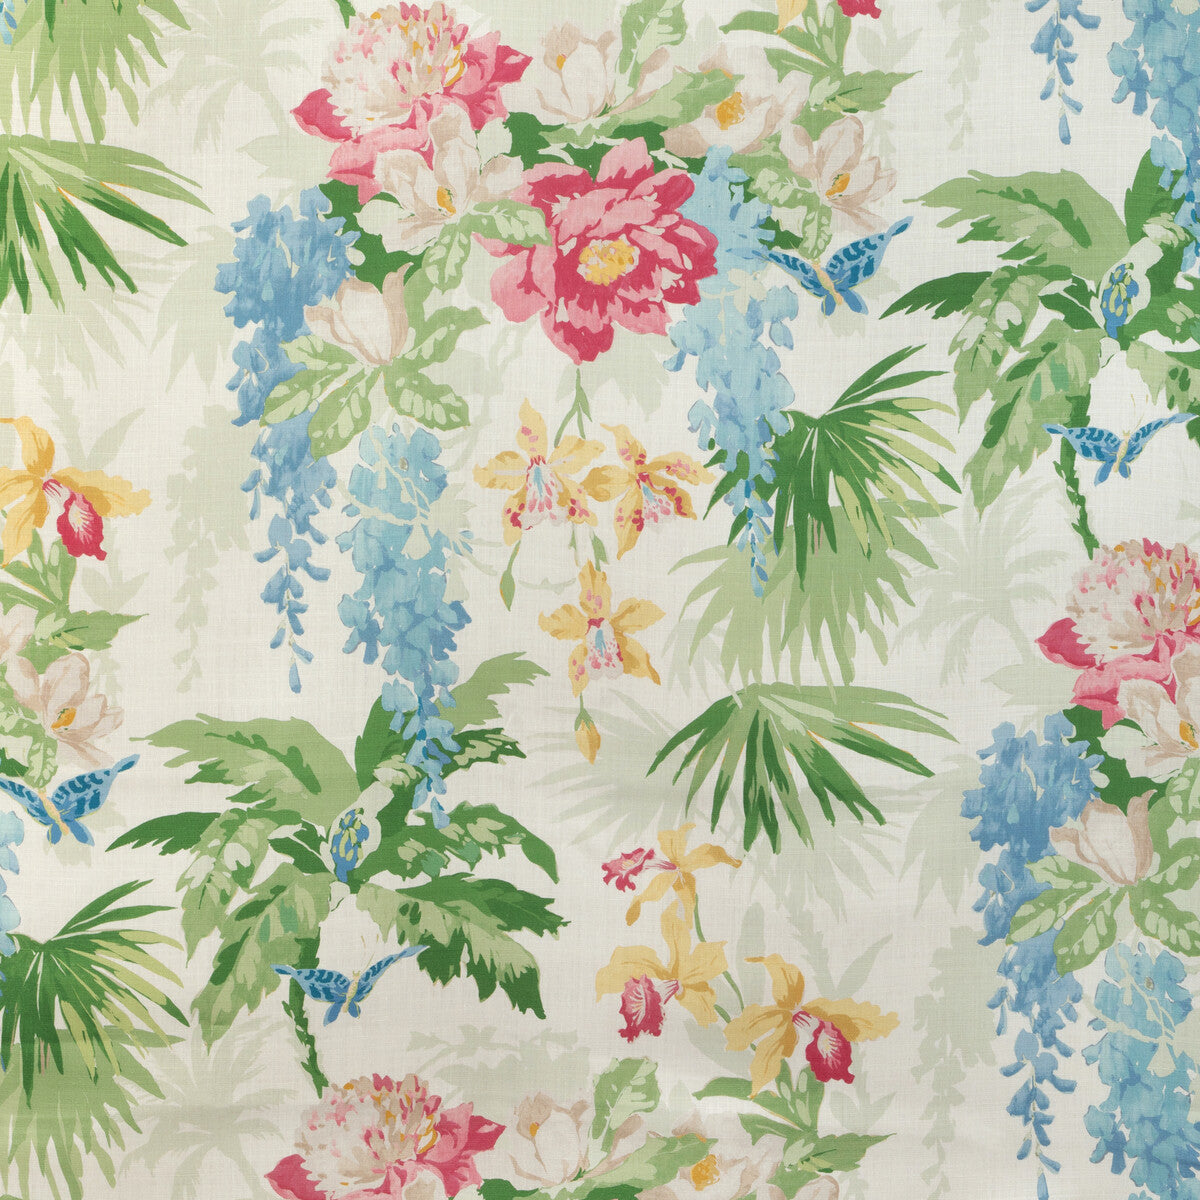 La Selva fabric in tropical color - pattern LA SELVA.317.0 - by Kravet Couture in the Casa Botanica collection